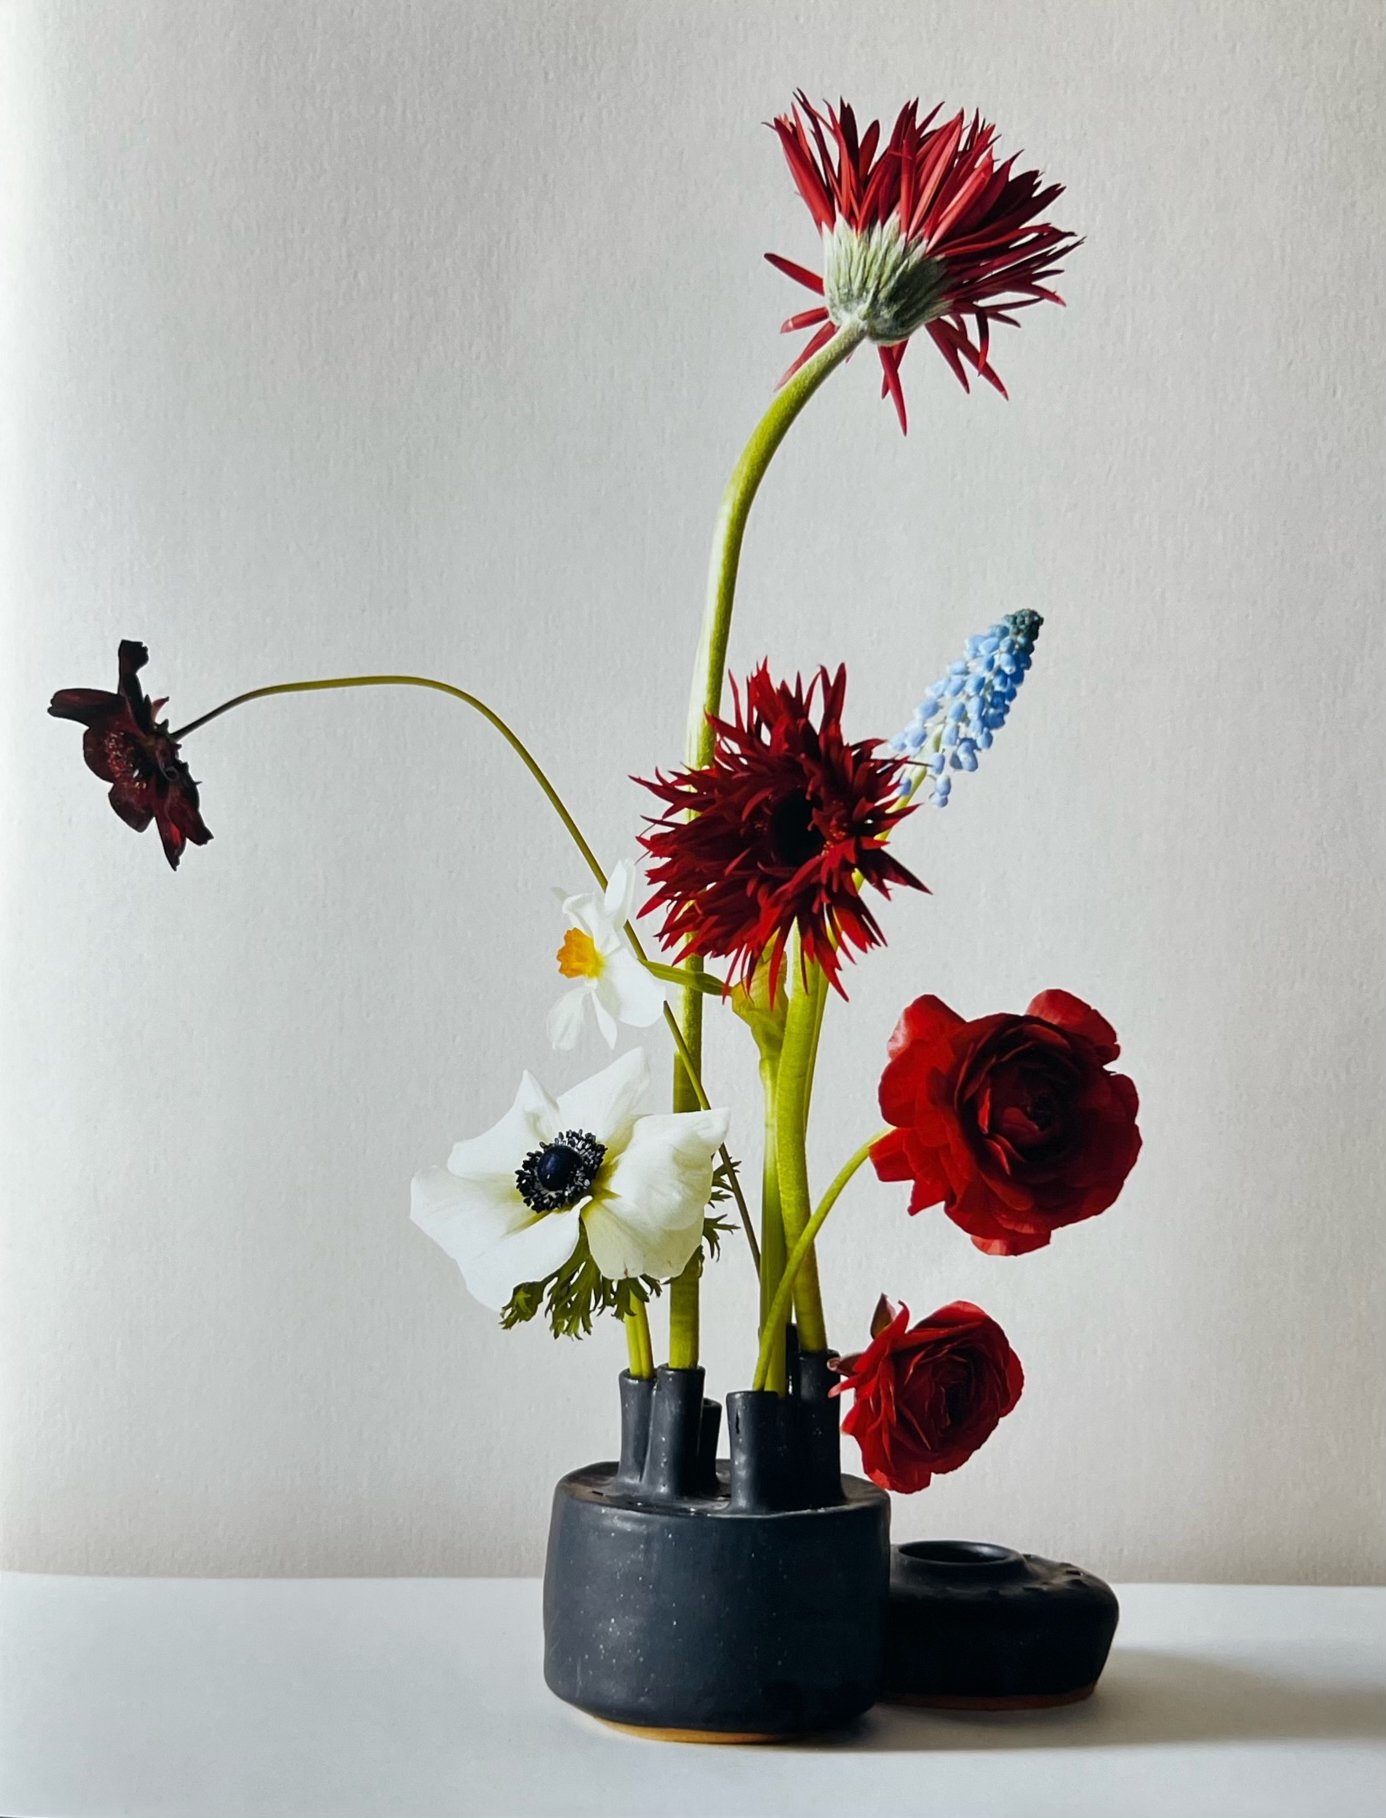 book: Art in Flower - Ito Shinsui